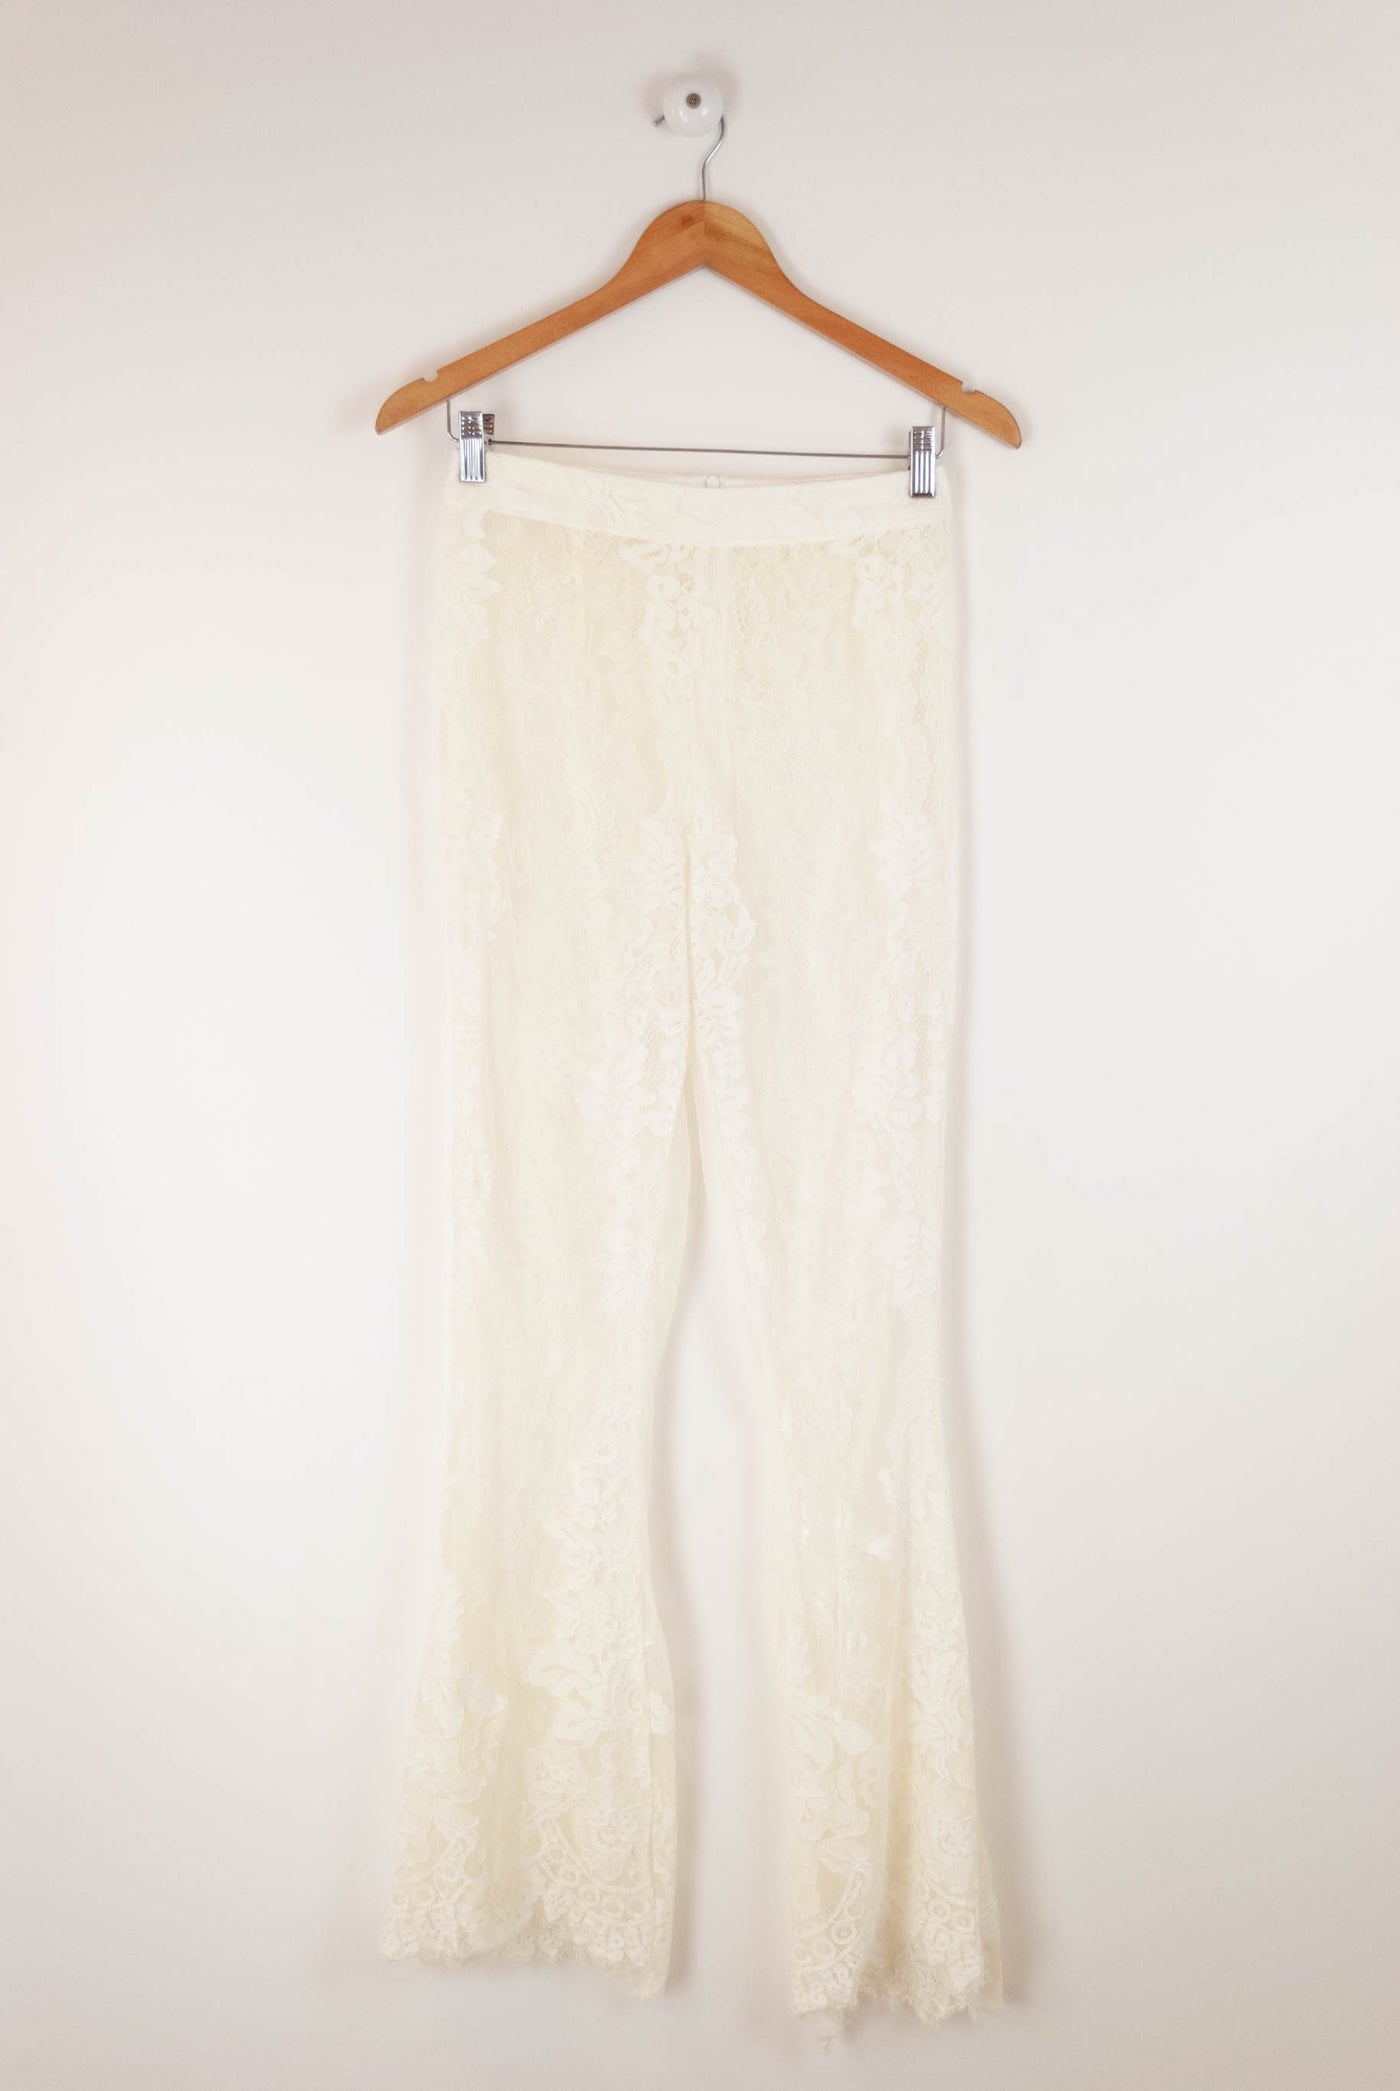 Pantalón semitrasparente blanco roto con encaje